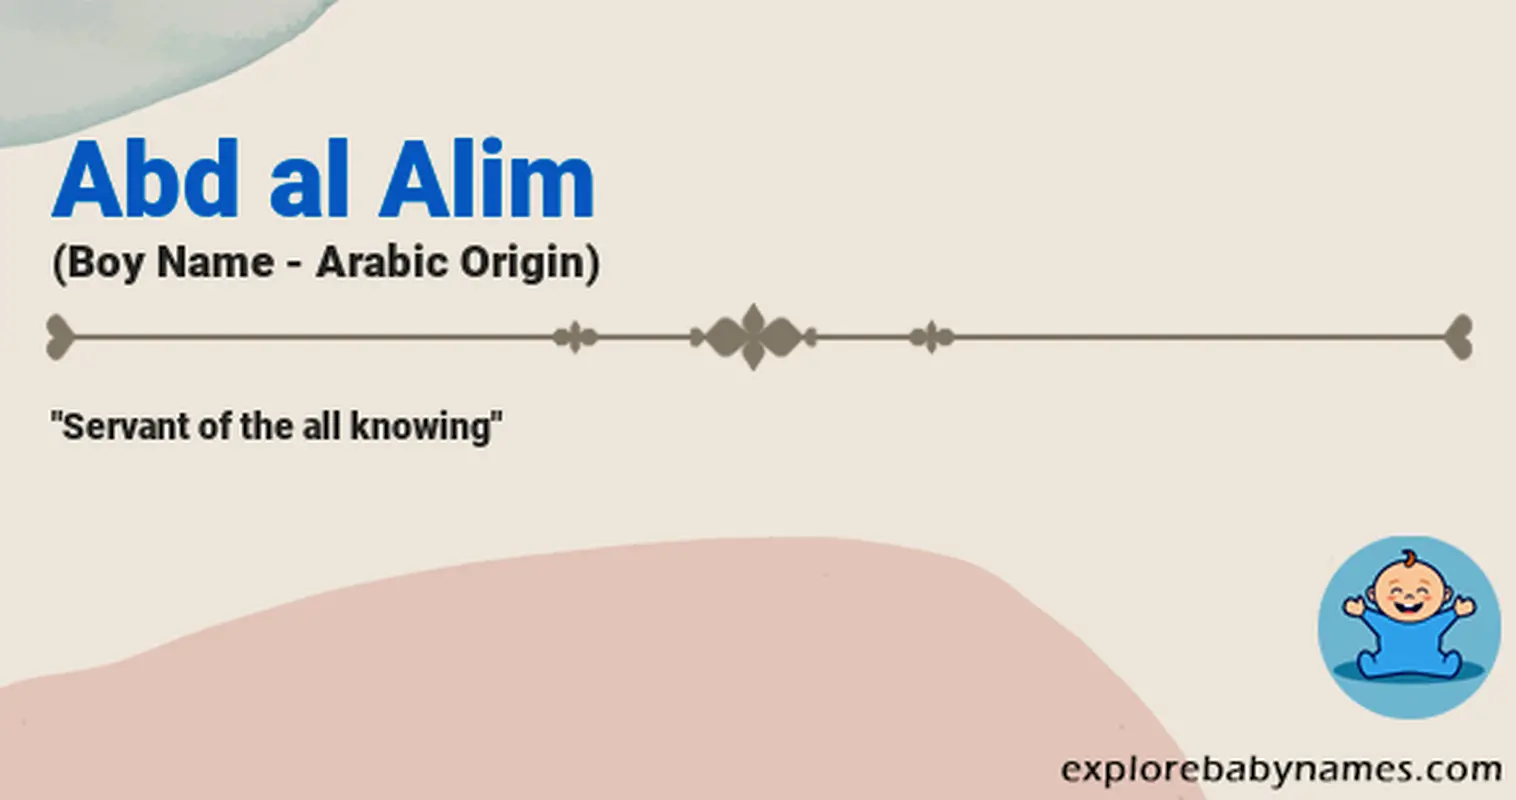 Meaning of Abd al Alim